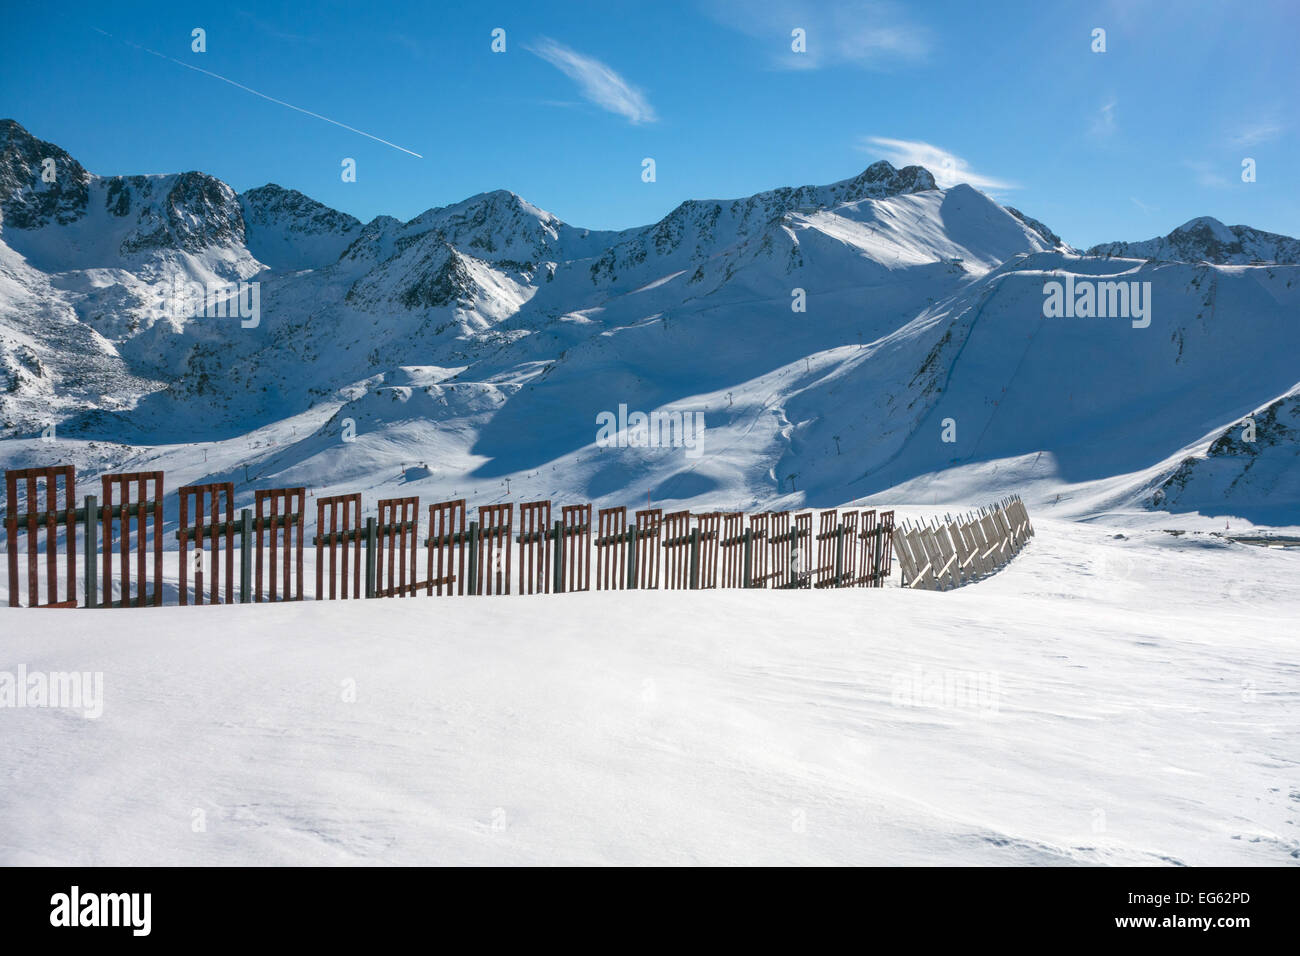 Snow fence and snowy mountains, blue sky, ski resort, Pas de la Casa, Andorra Stock Photo